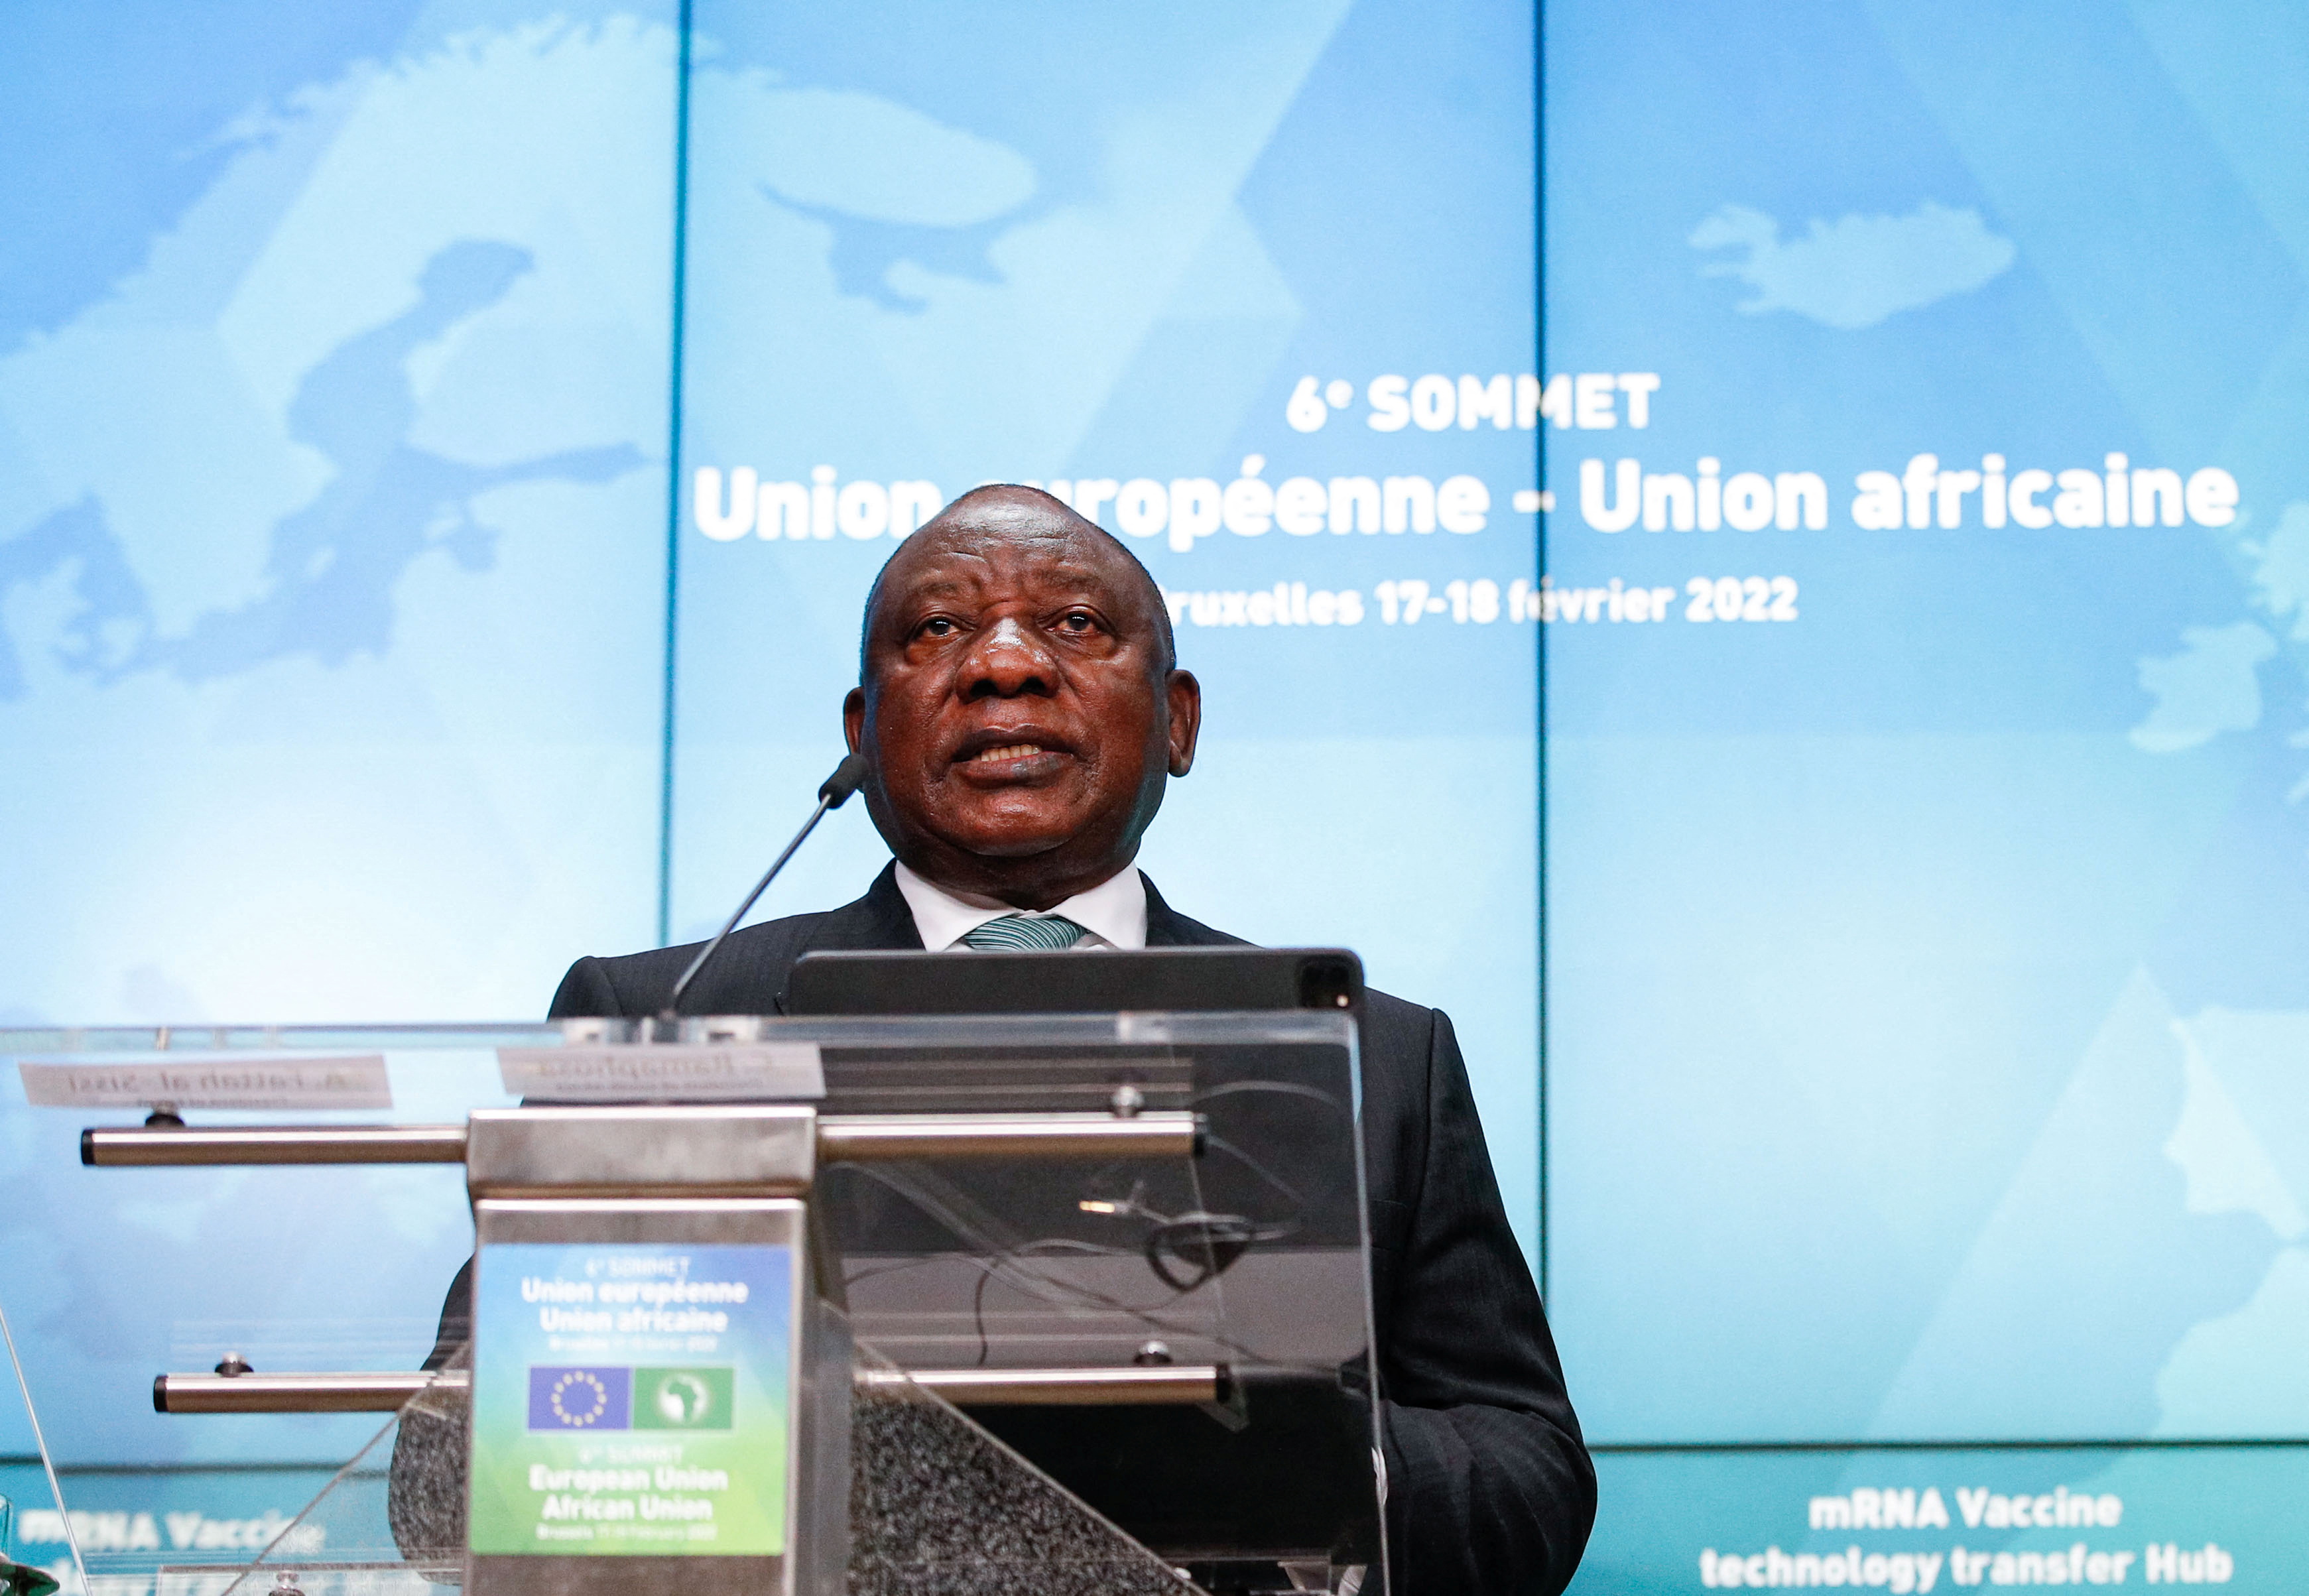 European Union - African Union summit in Brussels